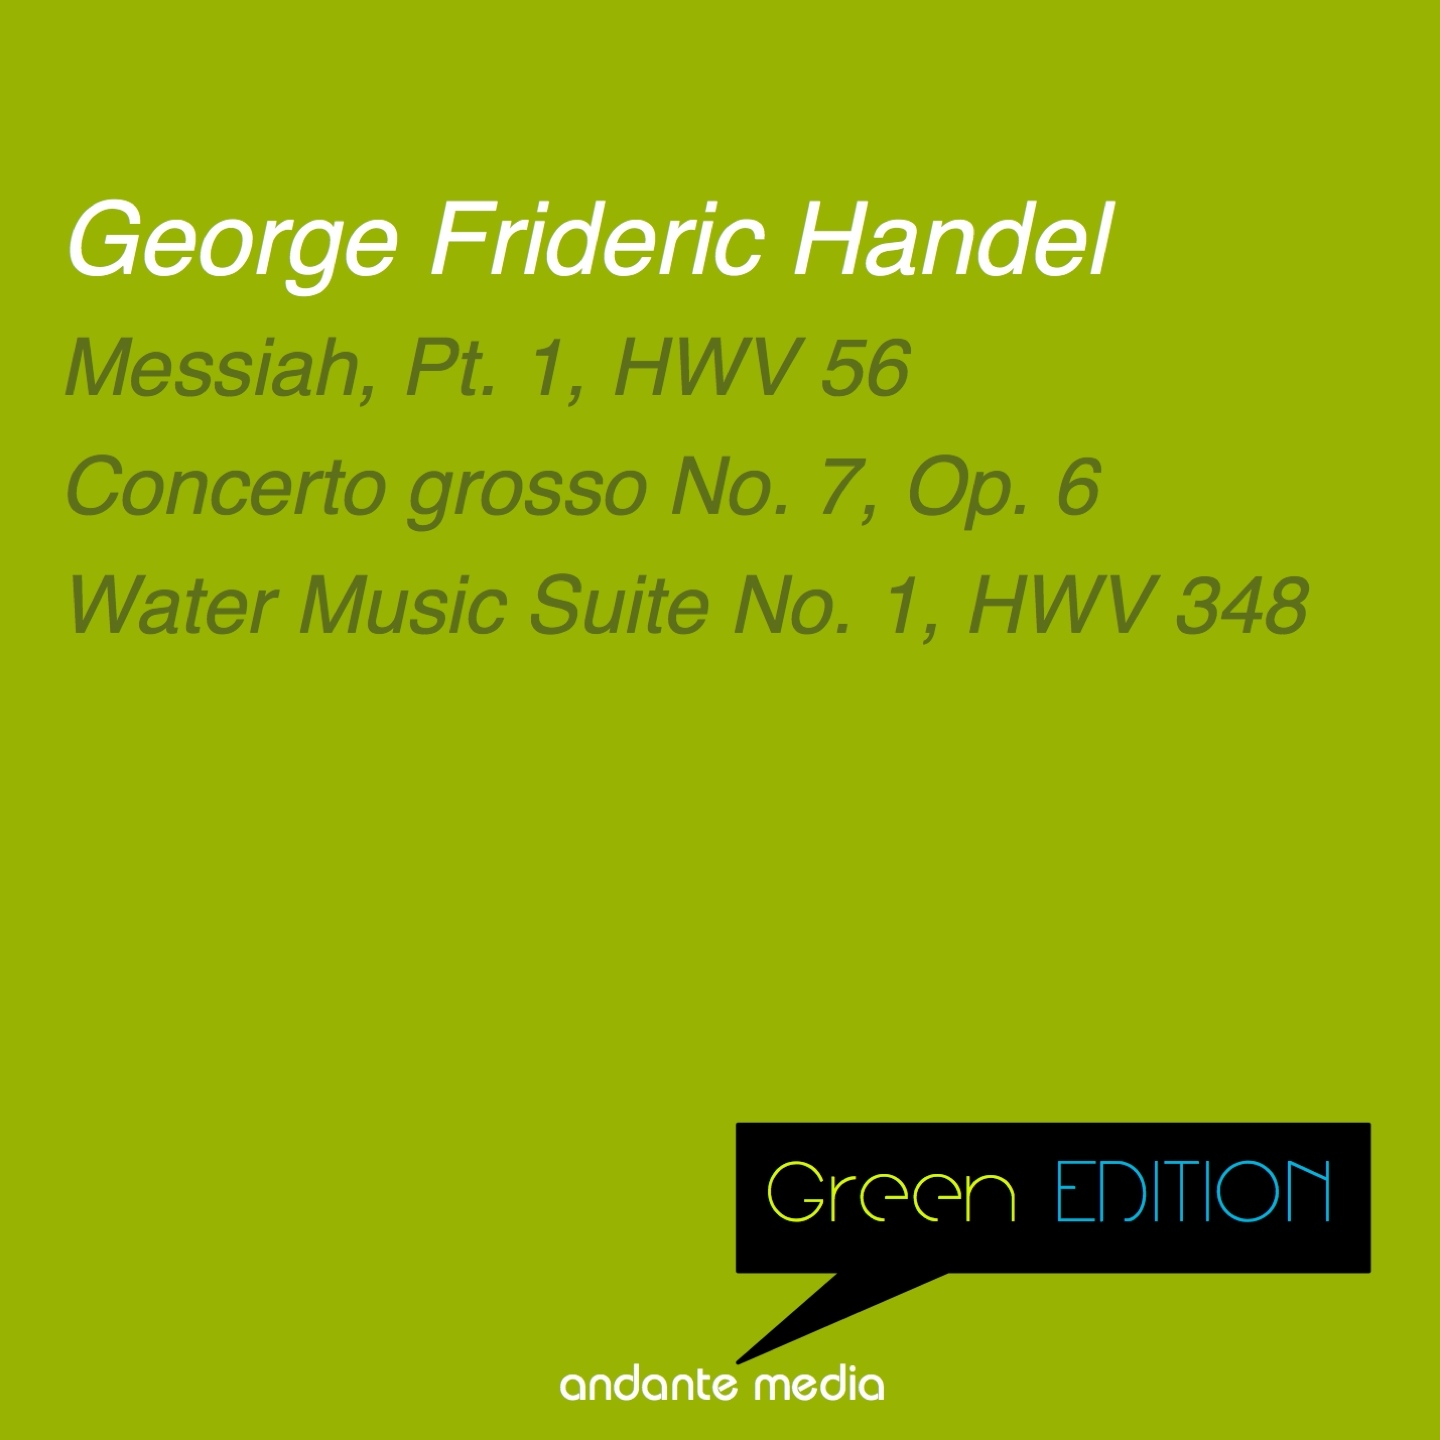 Green Edition - Handel: Messiah, Pt. 1, HWV 56 & Water Music, Suite No. 1, HWV 348